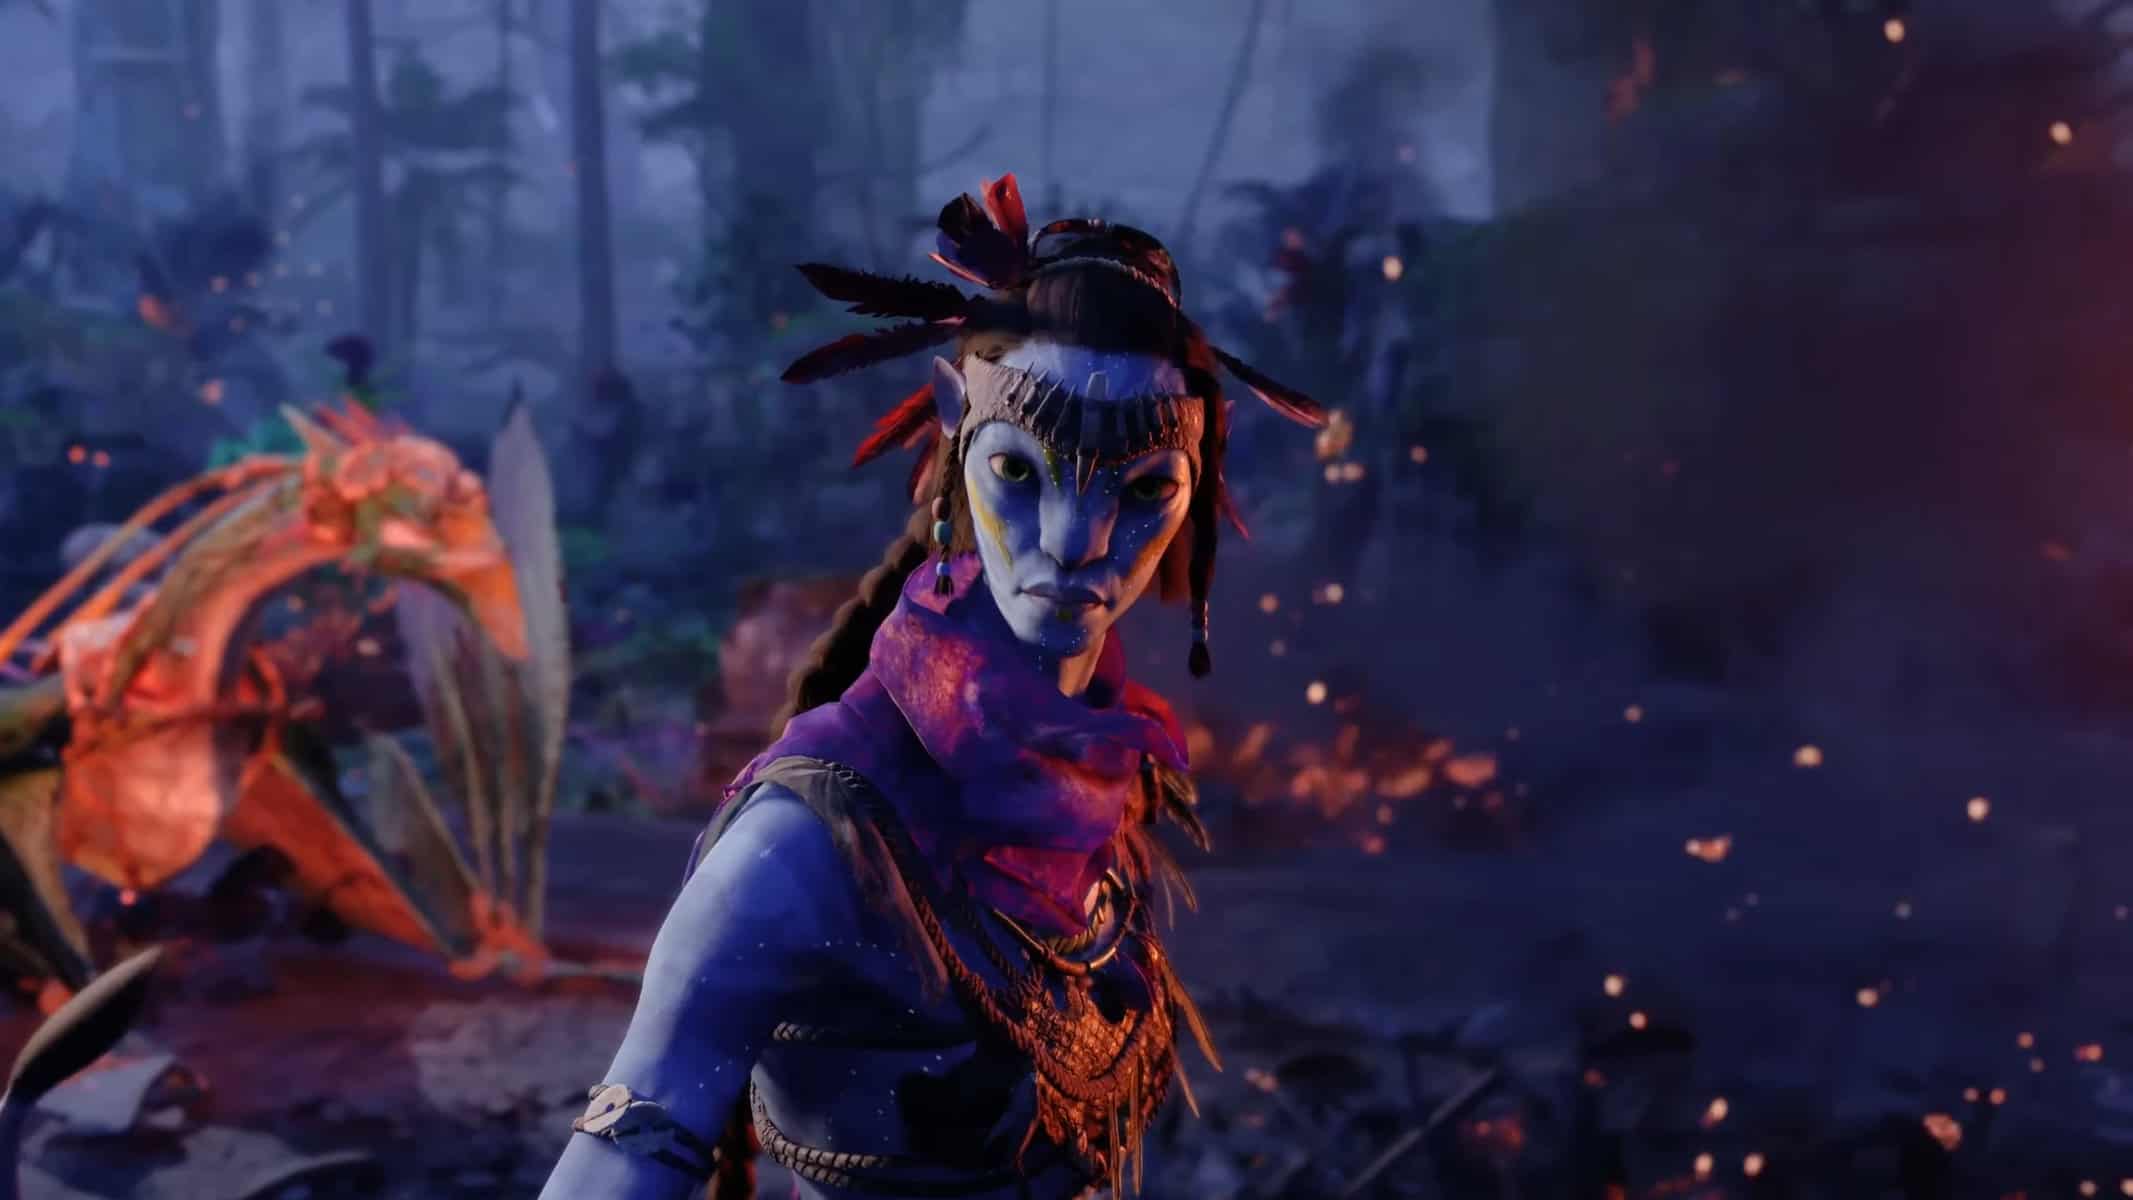 Avatar: Frontiers of Pandora - Features Trailer